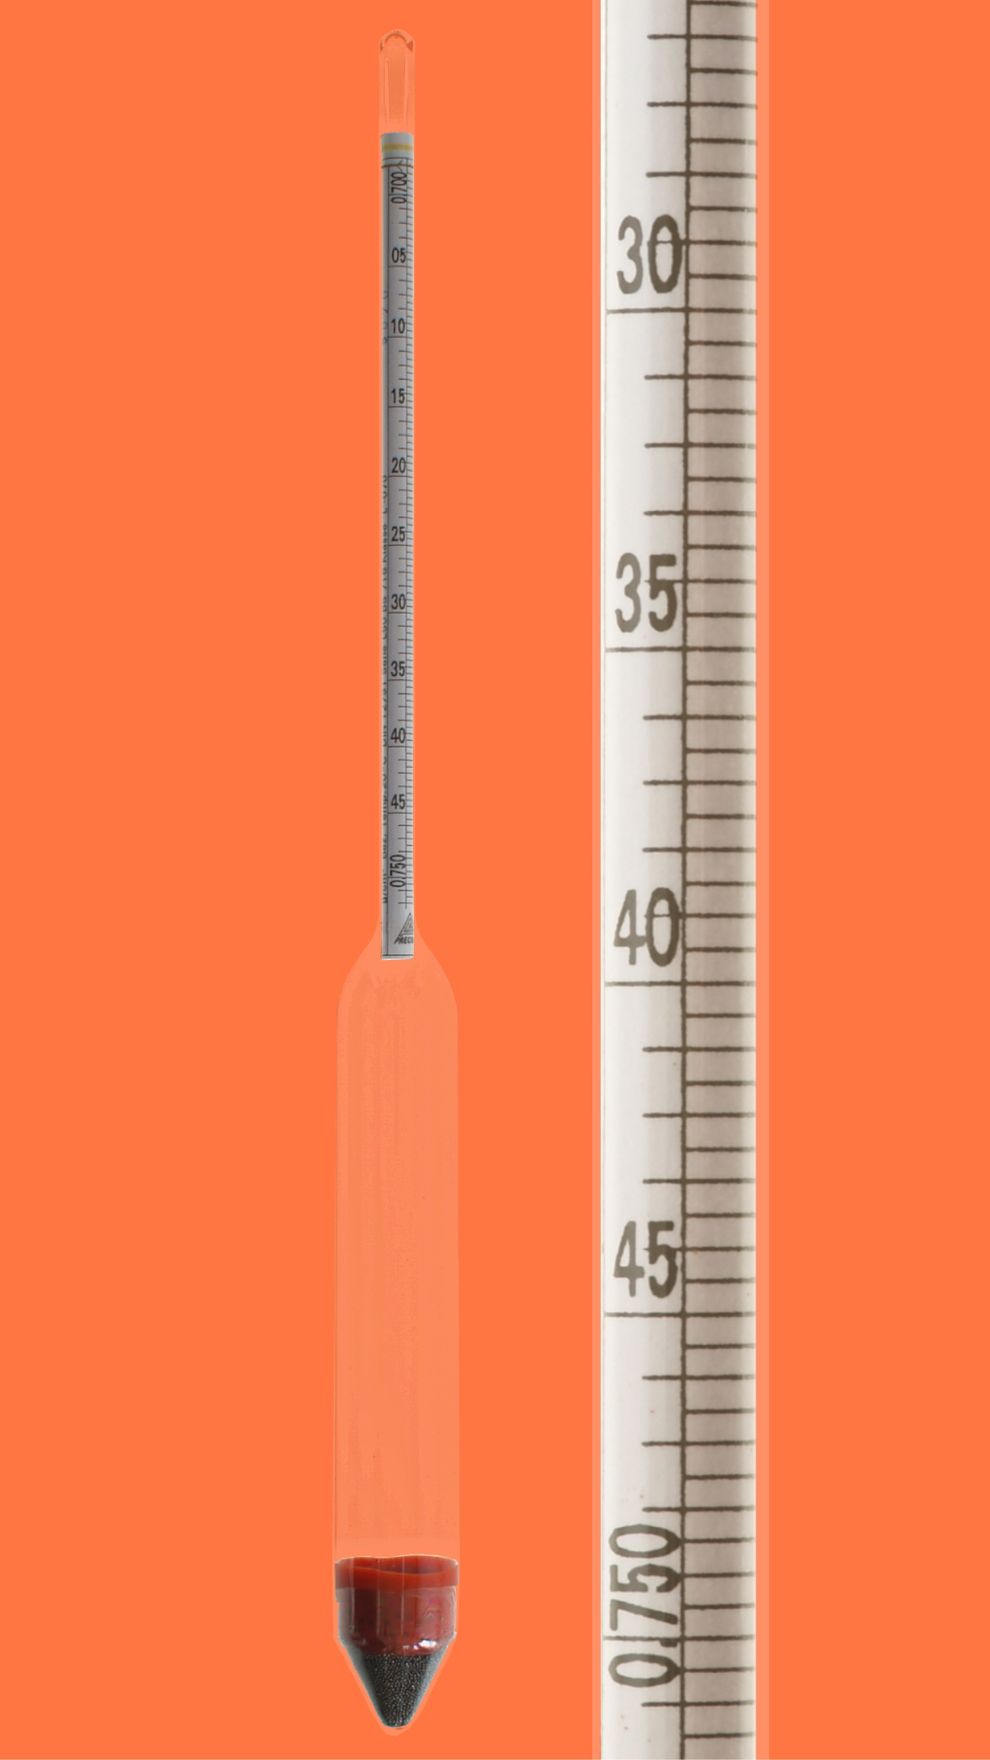 Aräometer, DIN 12791, L50, 1,50-1,55:0,0005g/cm³, Bezugstemp. 20°C, ohne Thermometer